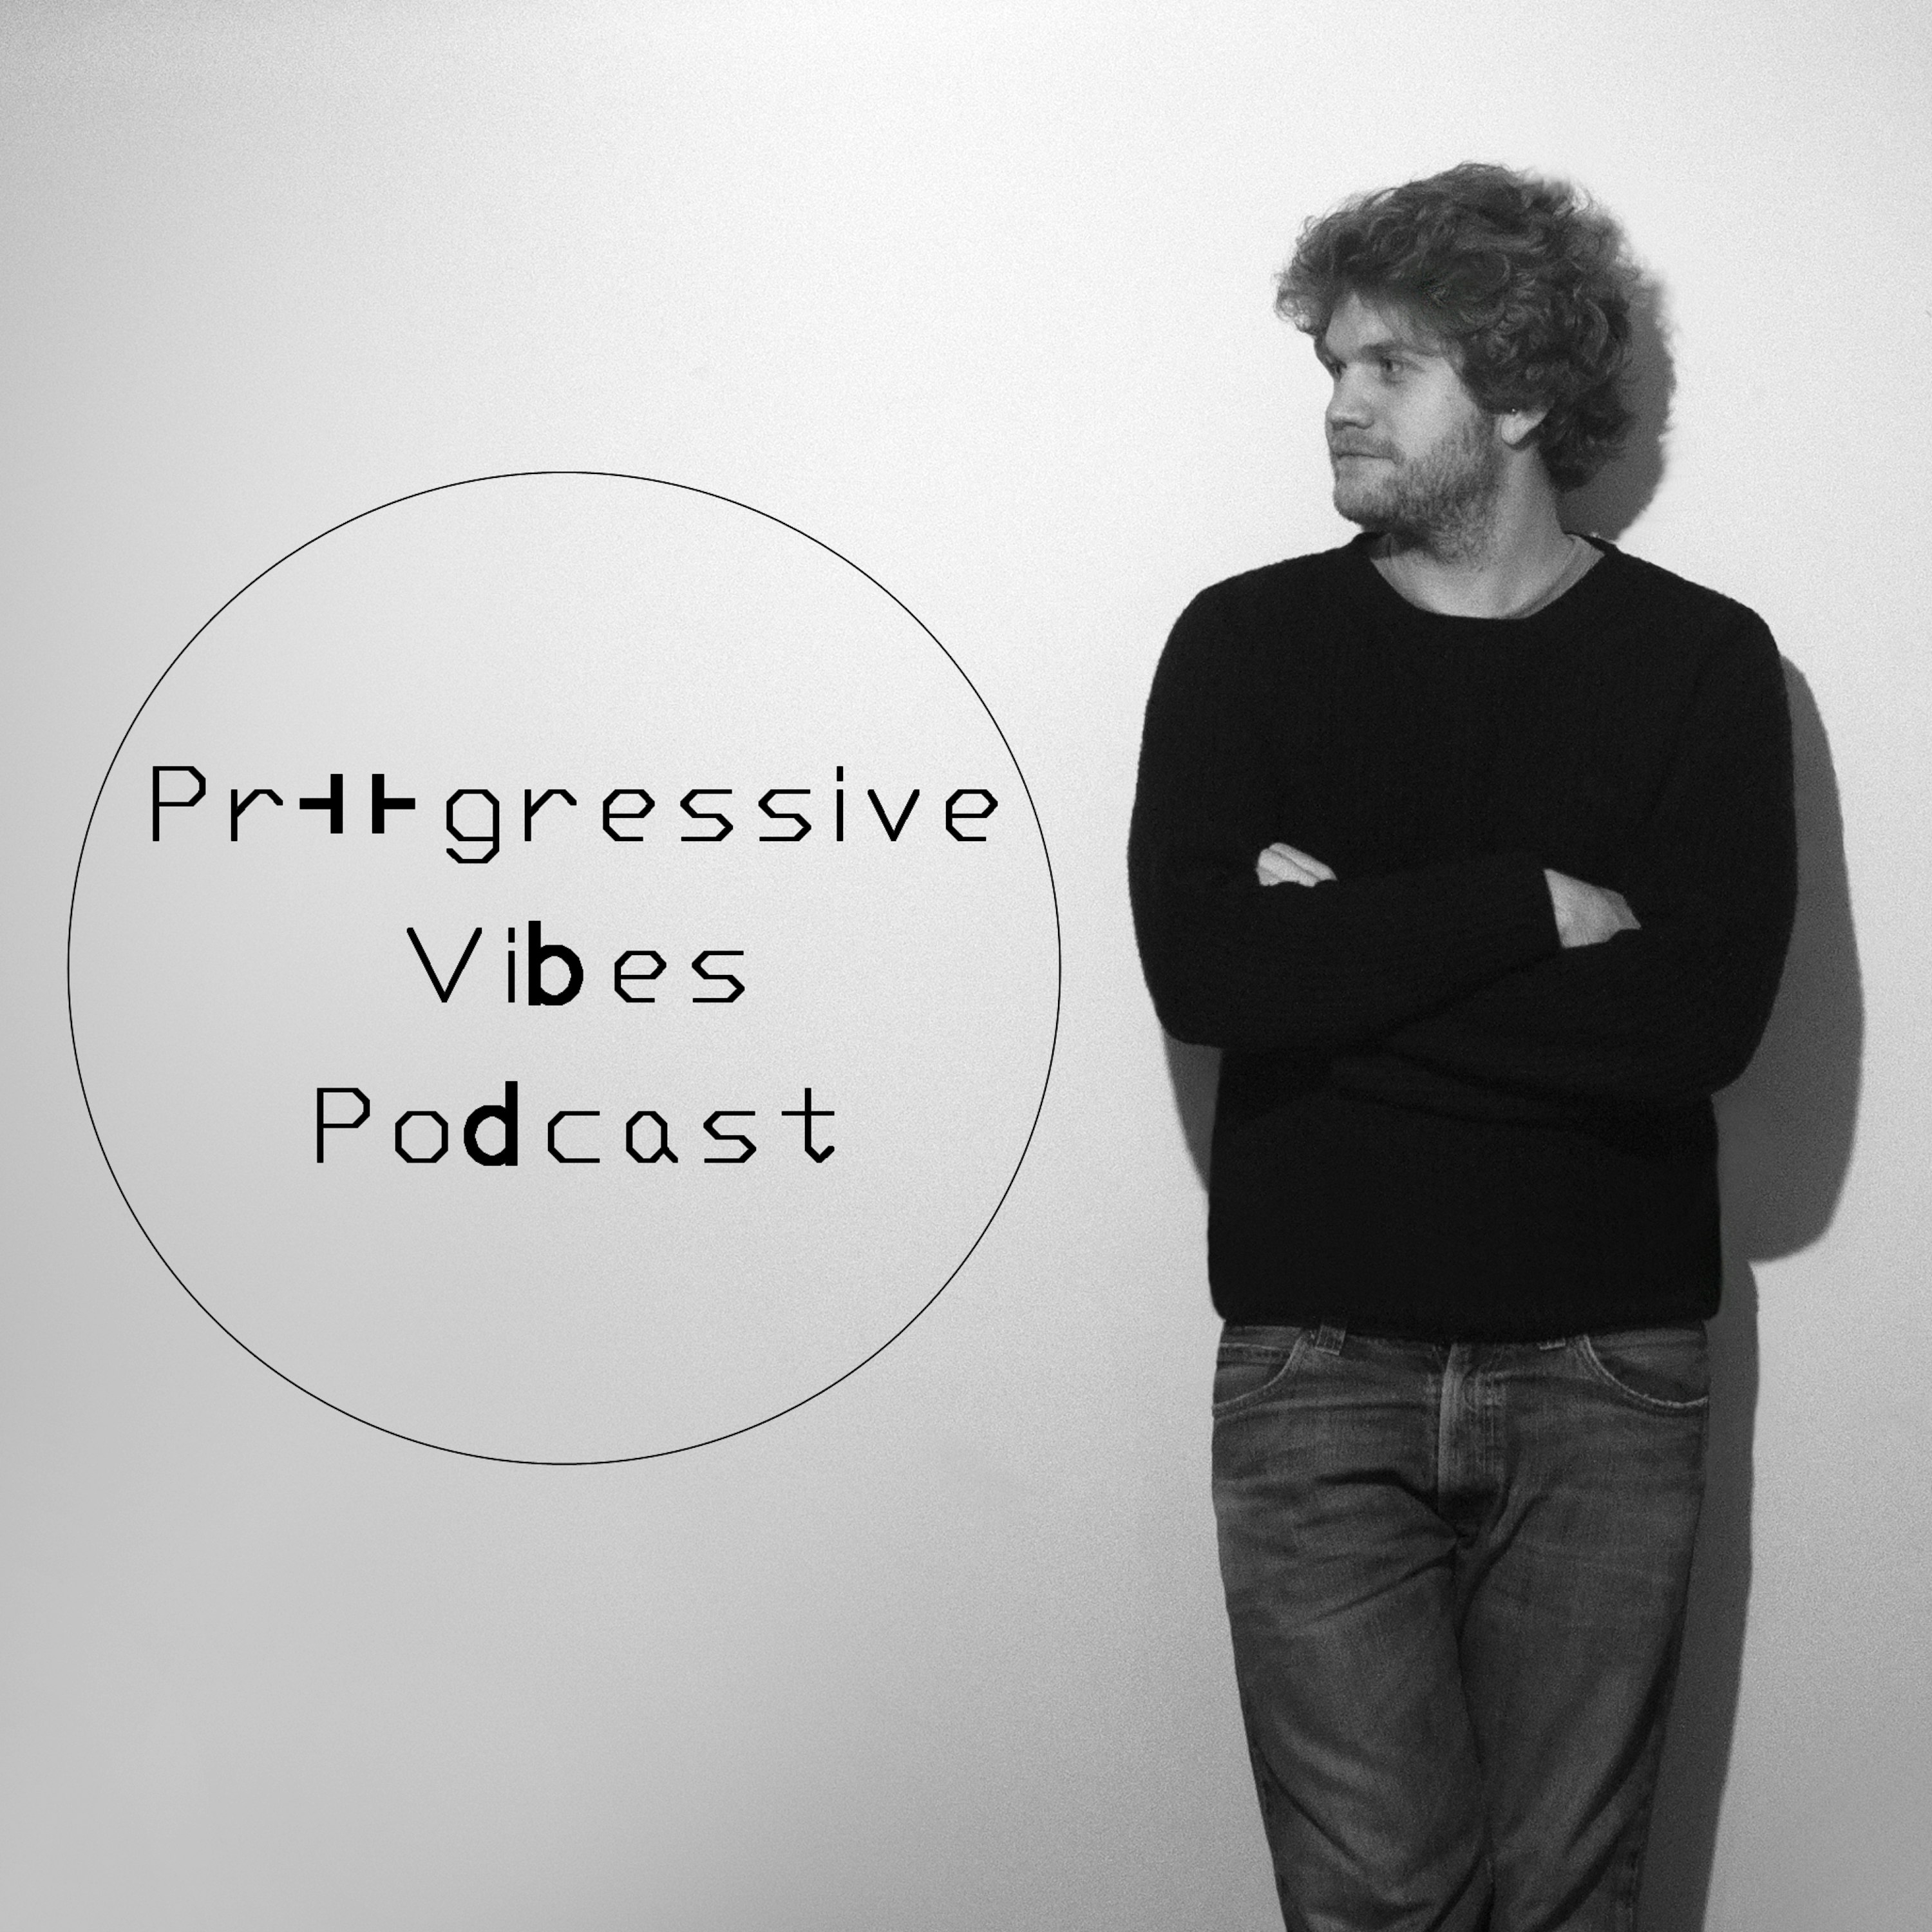 Progressive Vibes Podcast